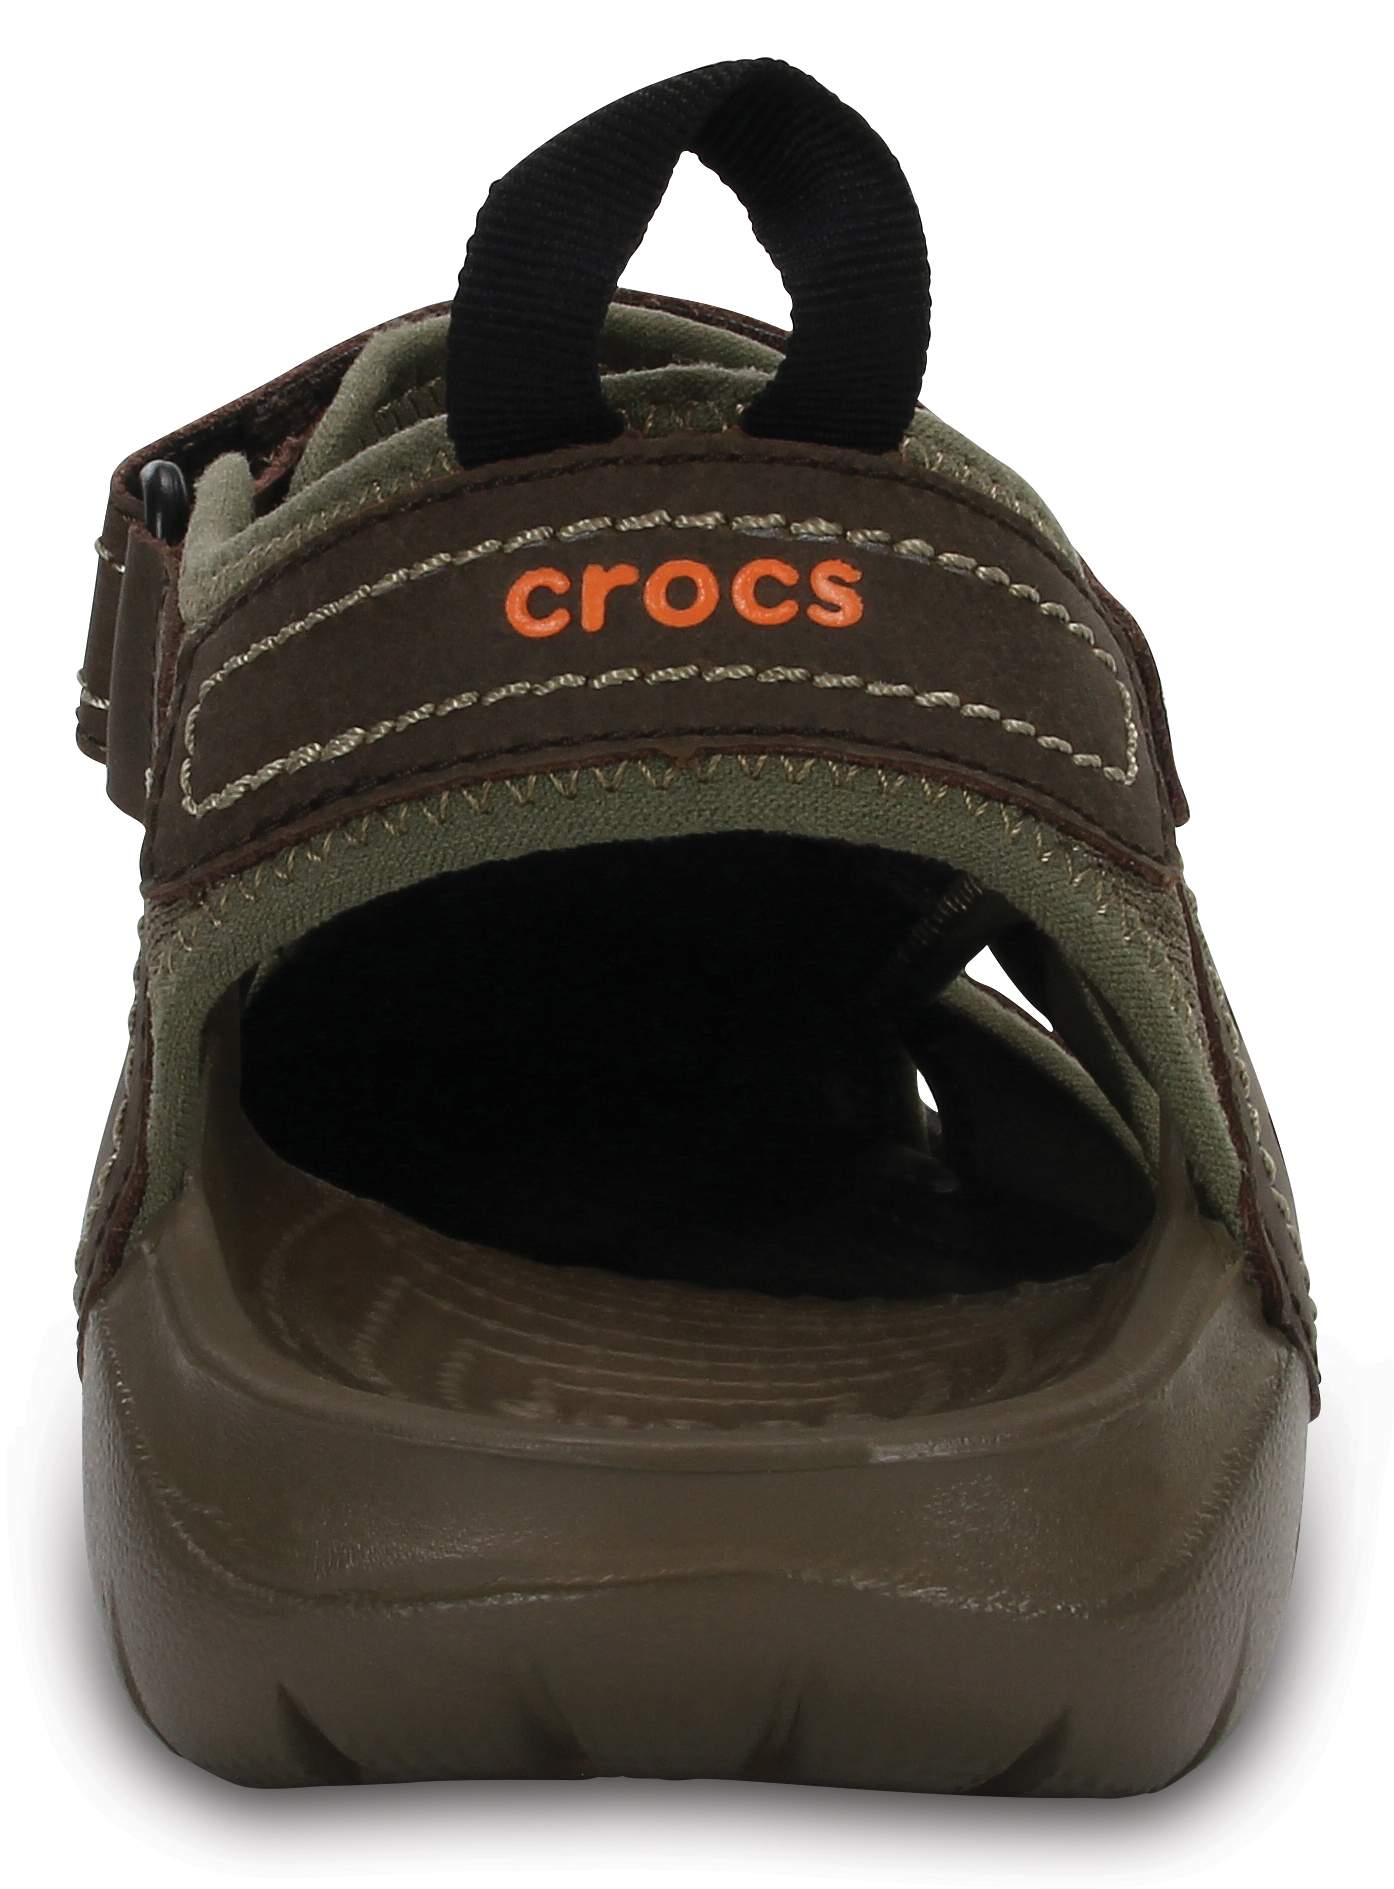 crocs men's swiftwater leather fisherman sandal